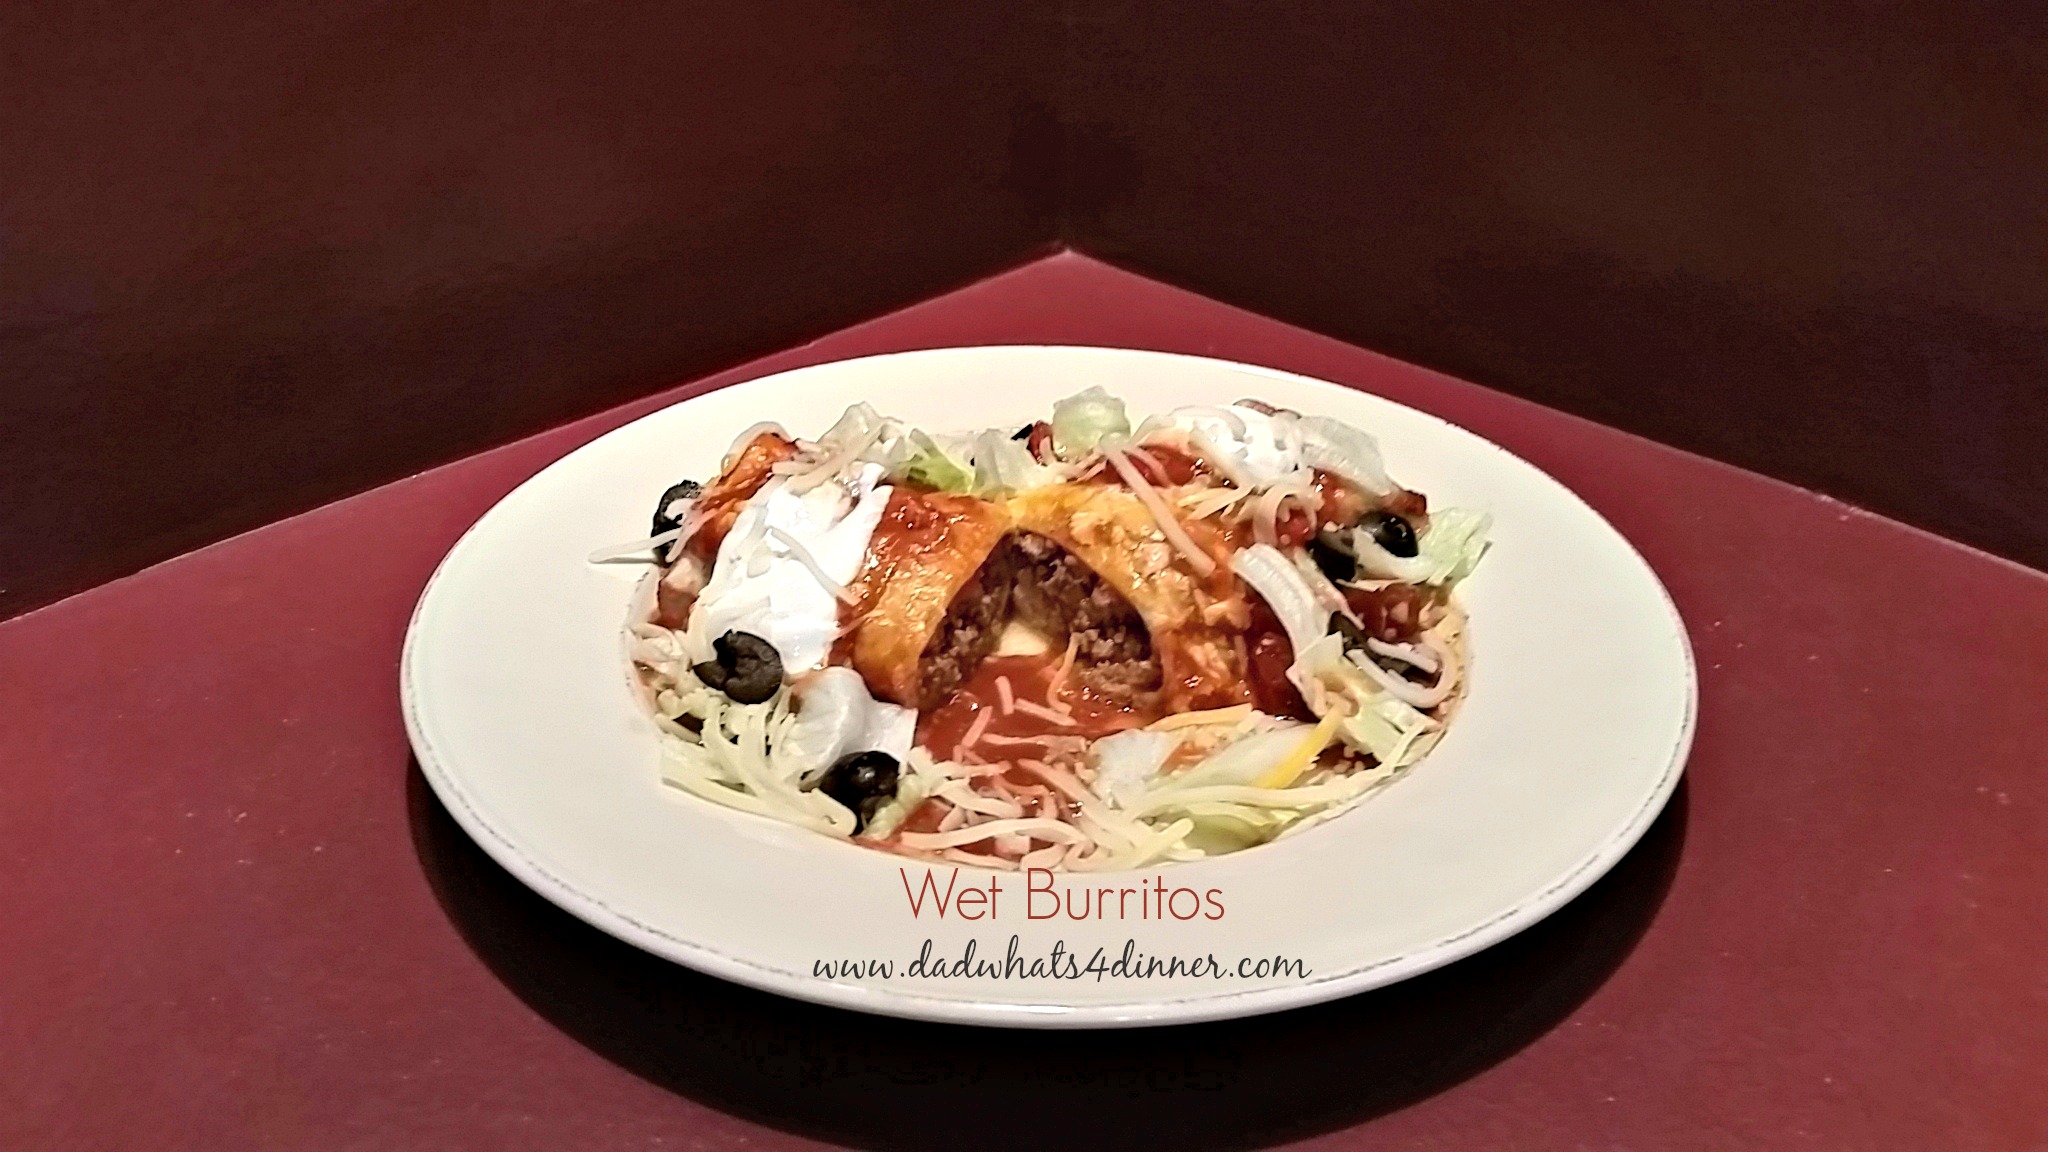 Wet Burritos | http://dadwhats4dinner.com